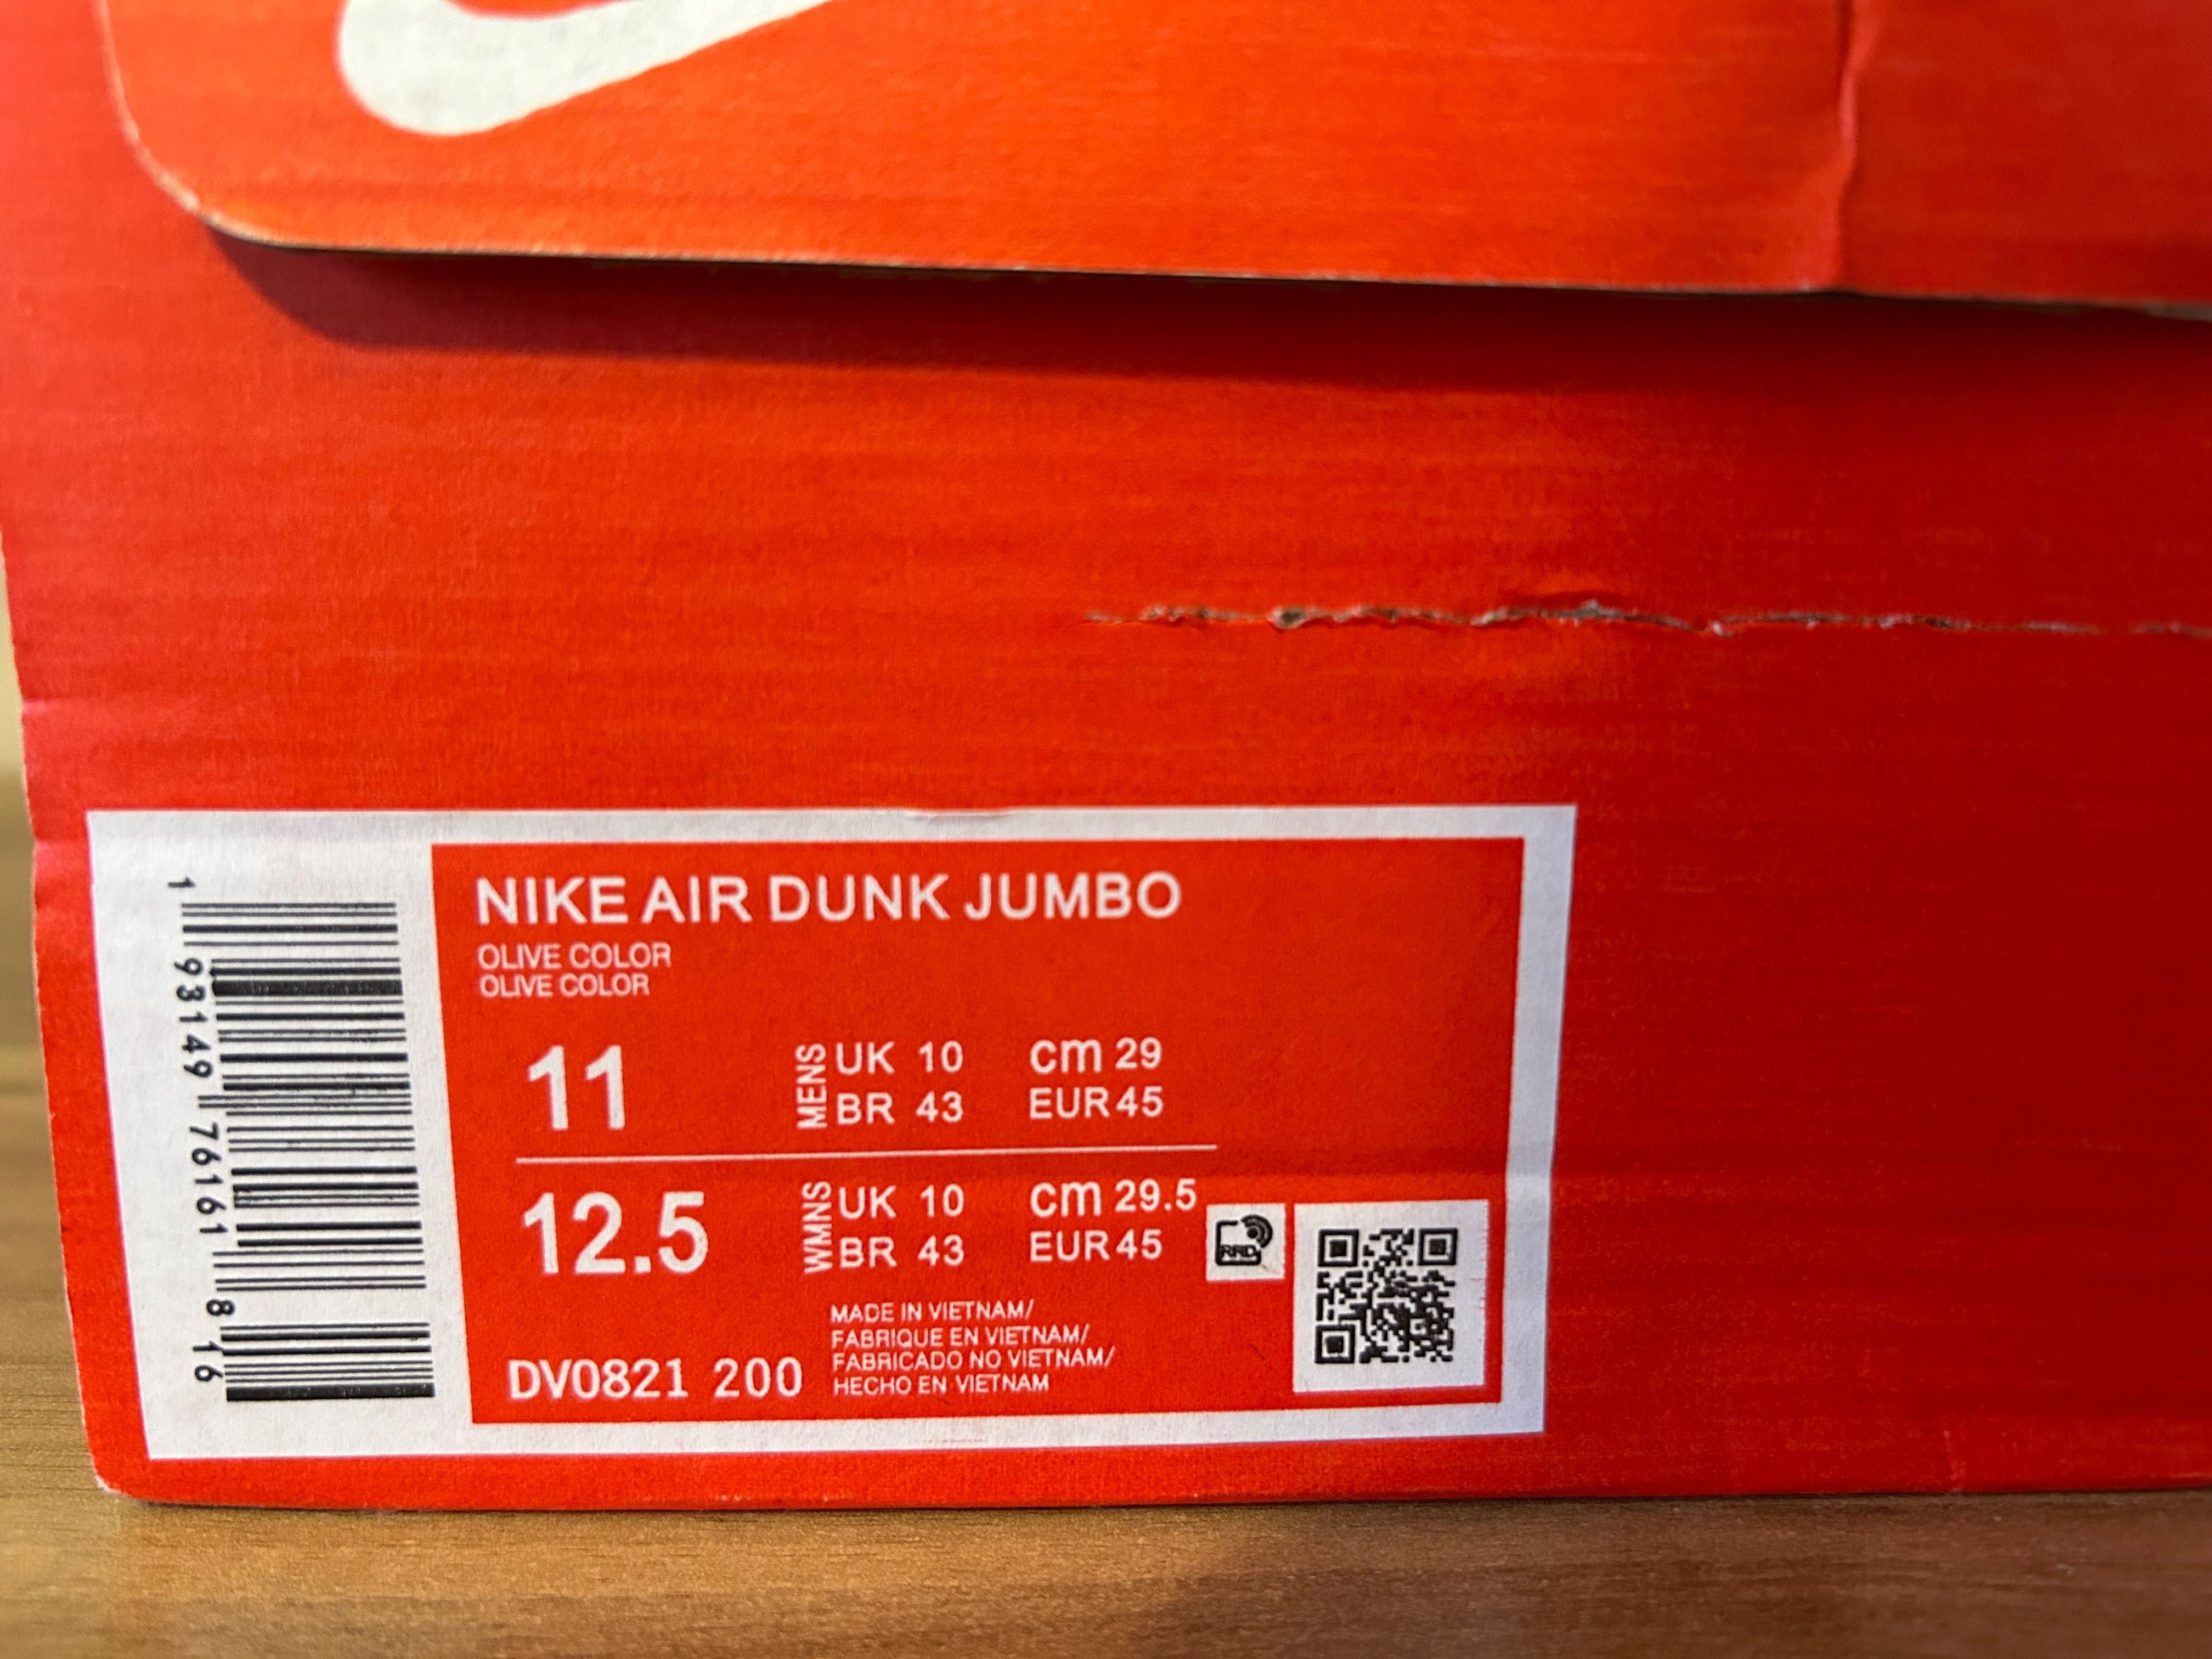 45 size Nike Air Dunk Jumbo
Medium Olive